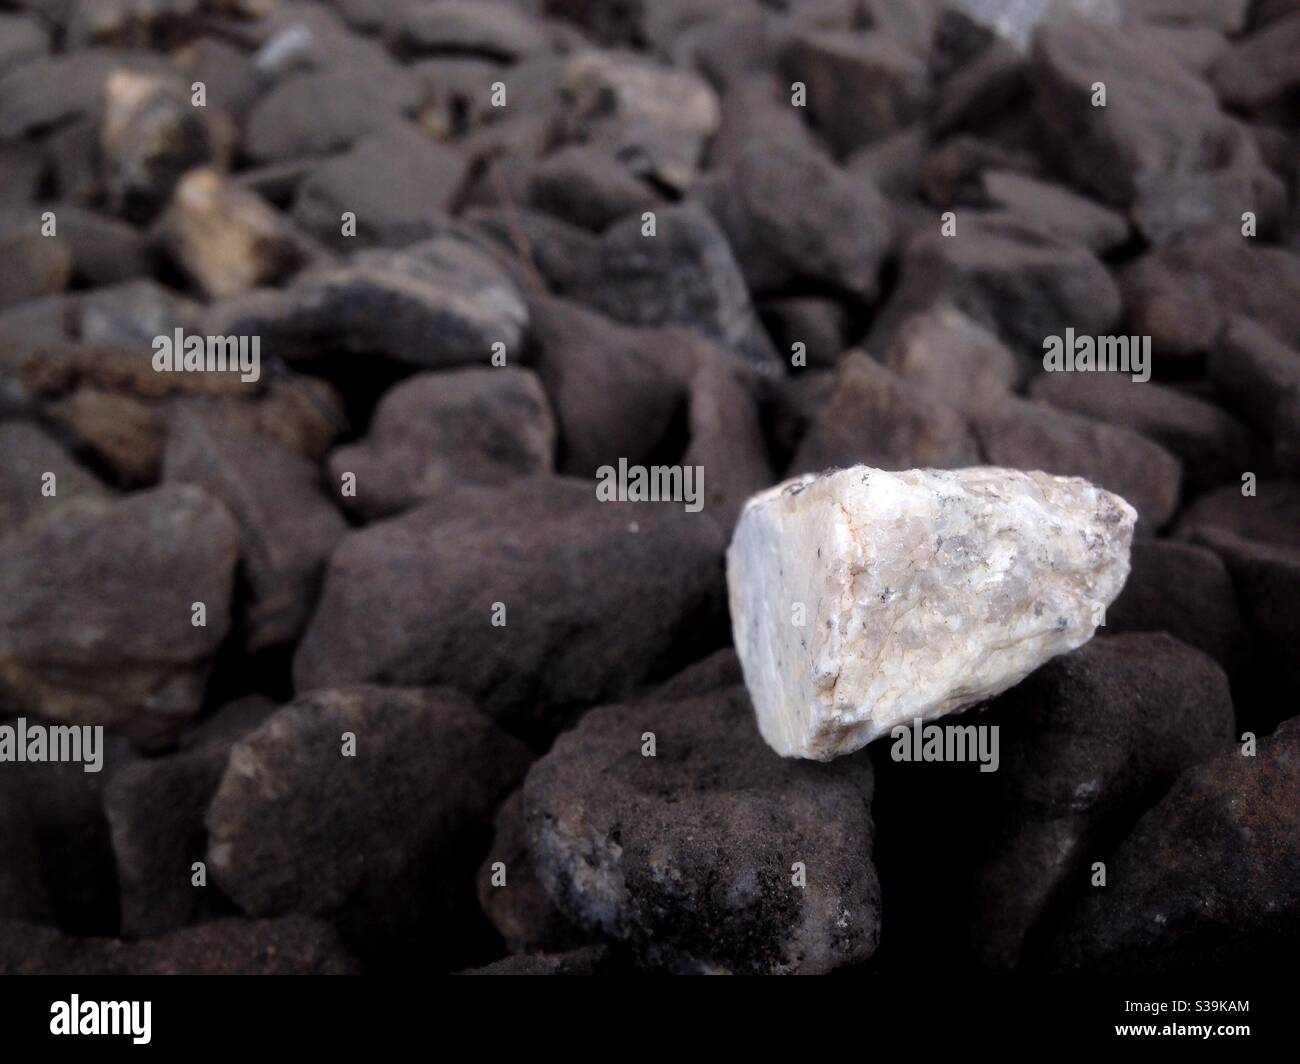 A white stone among black stones Stock Photo